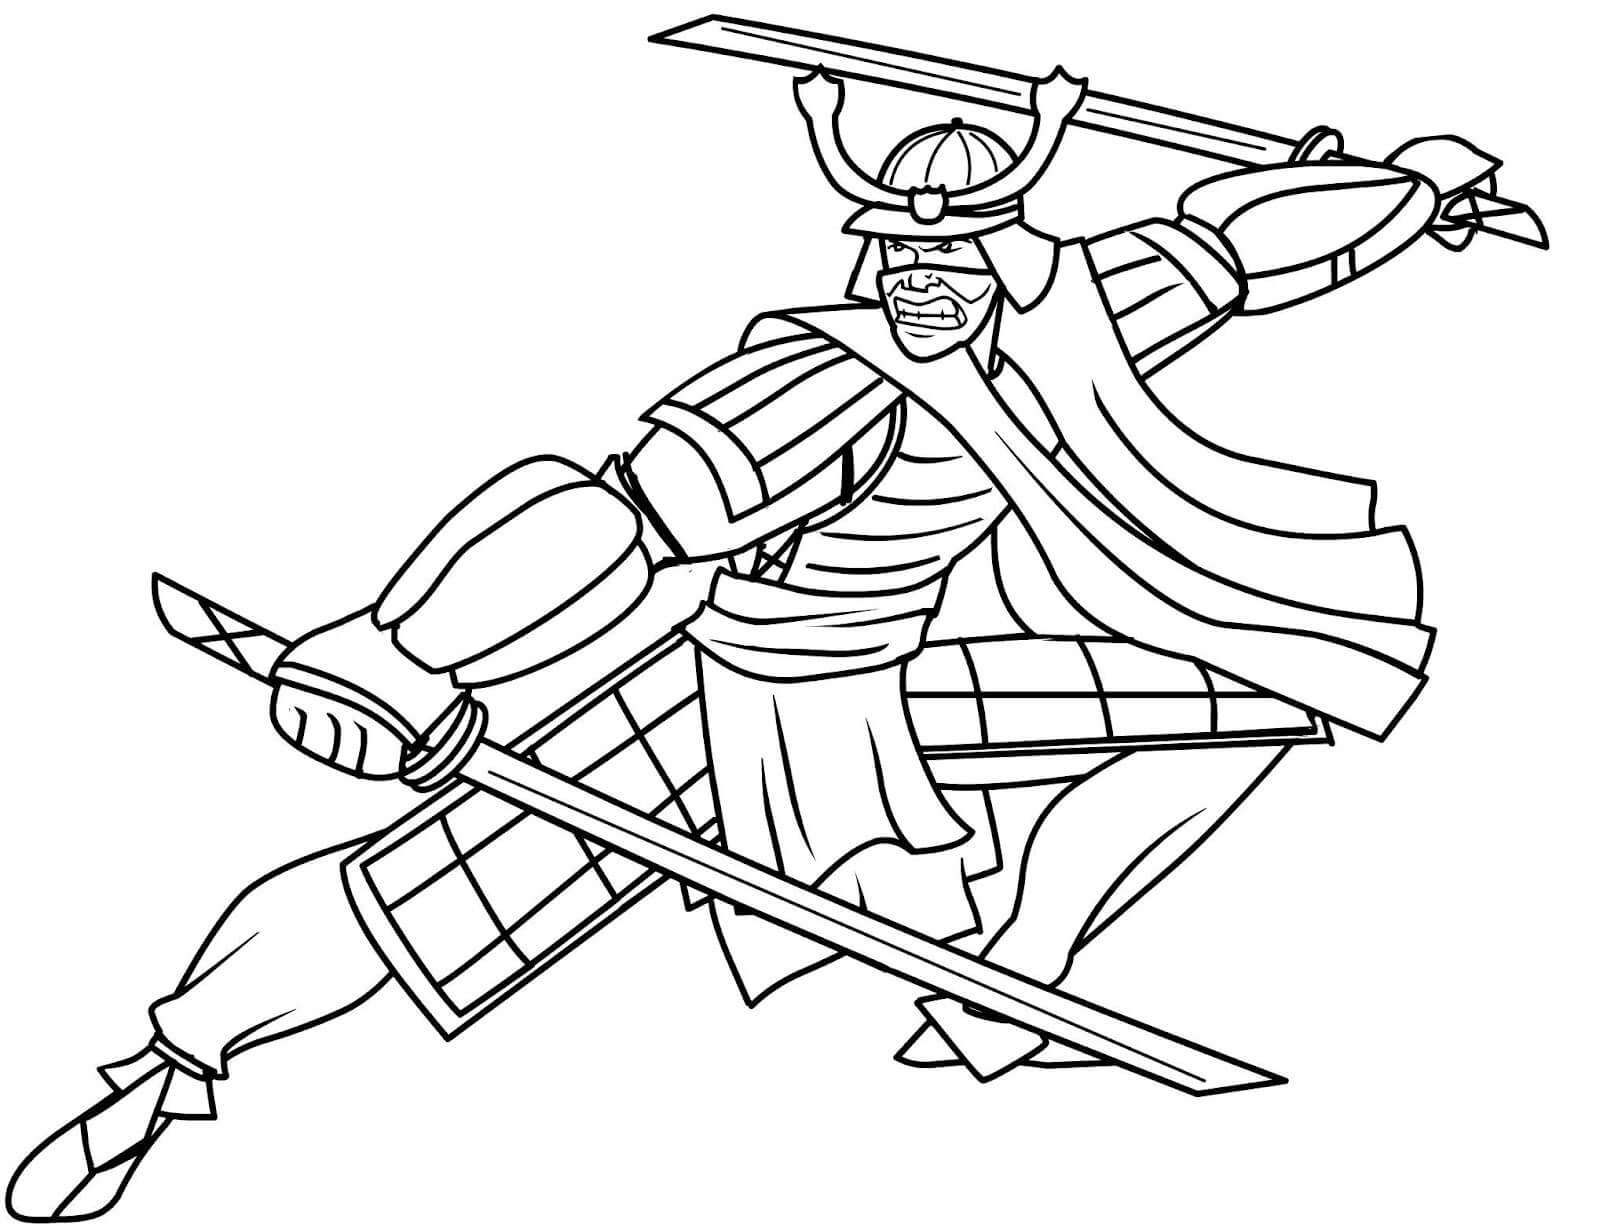 Samurai sosteniendo dos Espadas